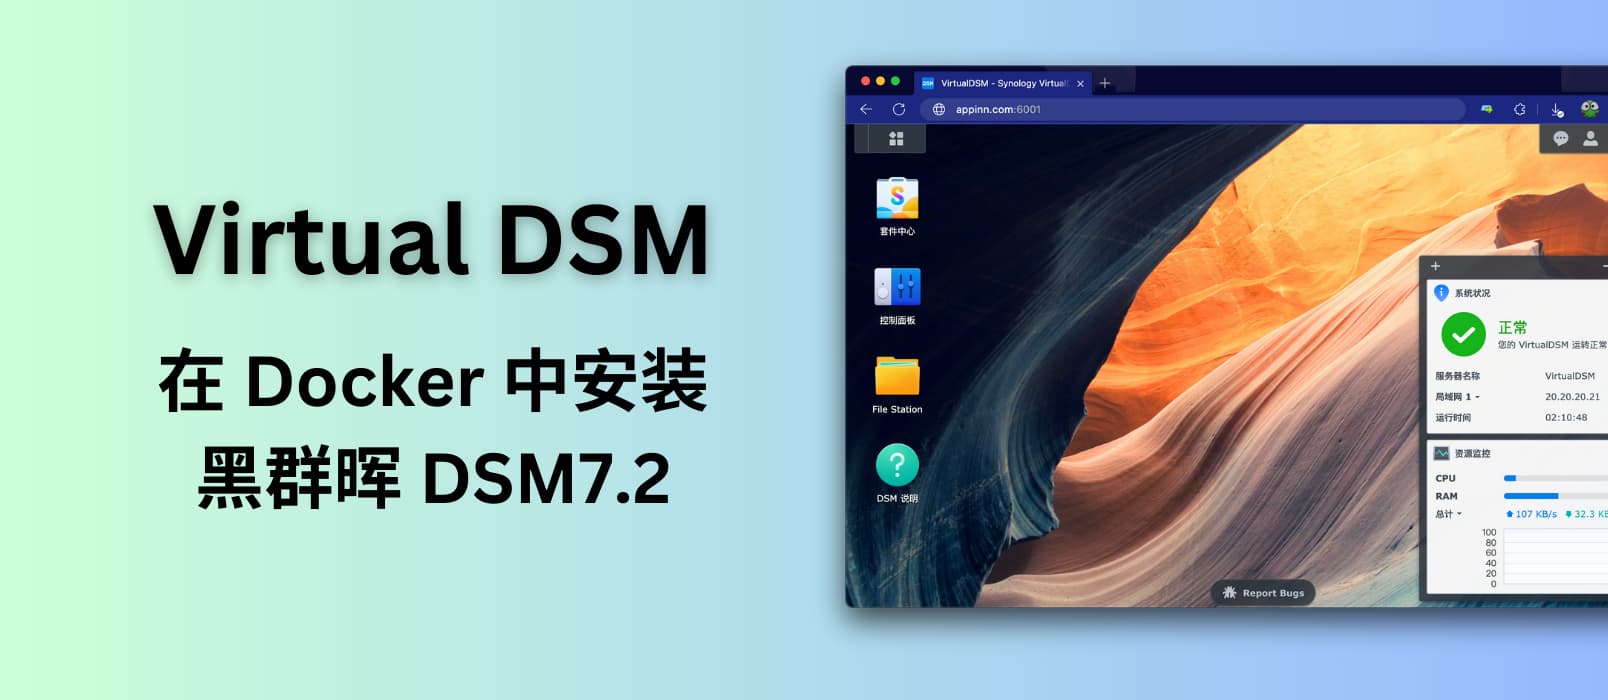 Virtual DSM - 在 Docker 里安装黑群晖 DSM 7.2 系统 1